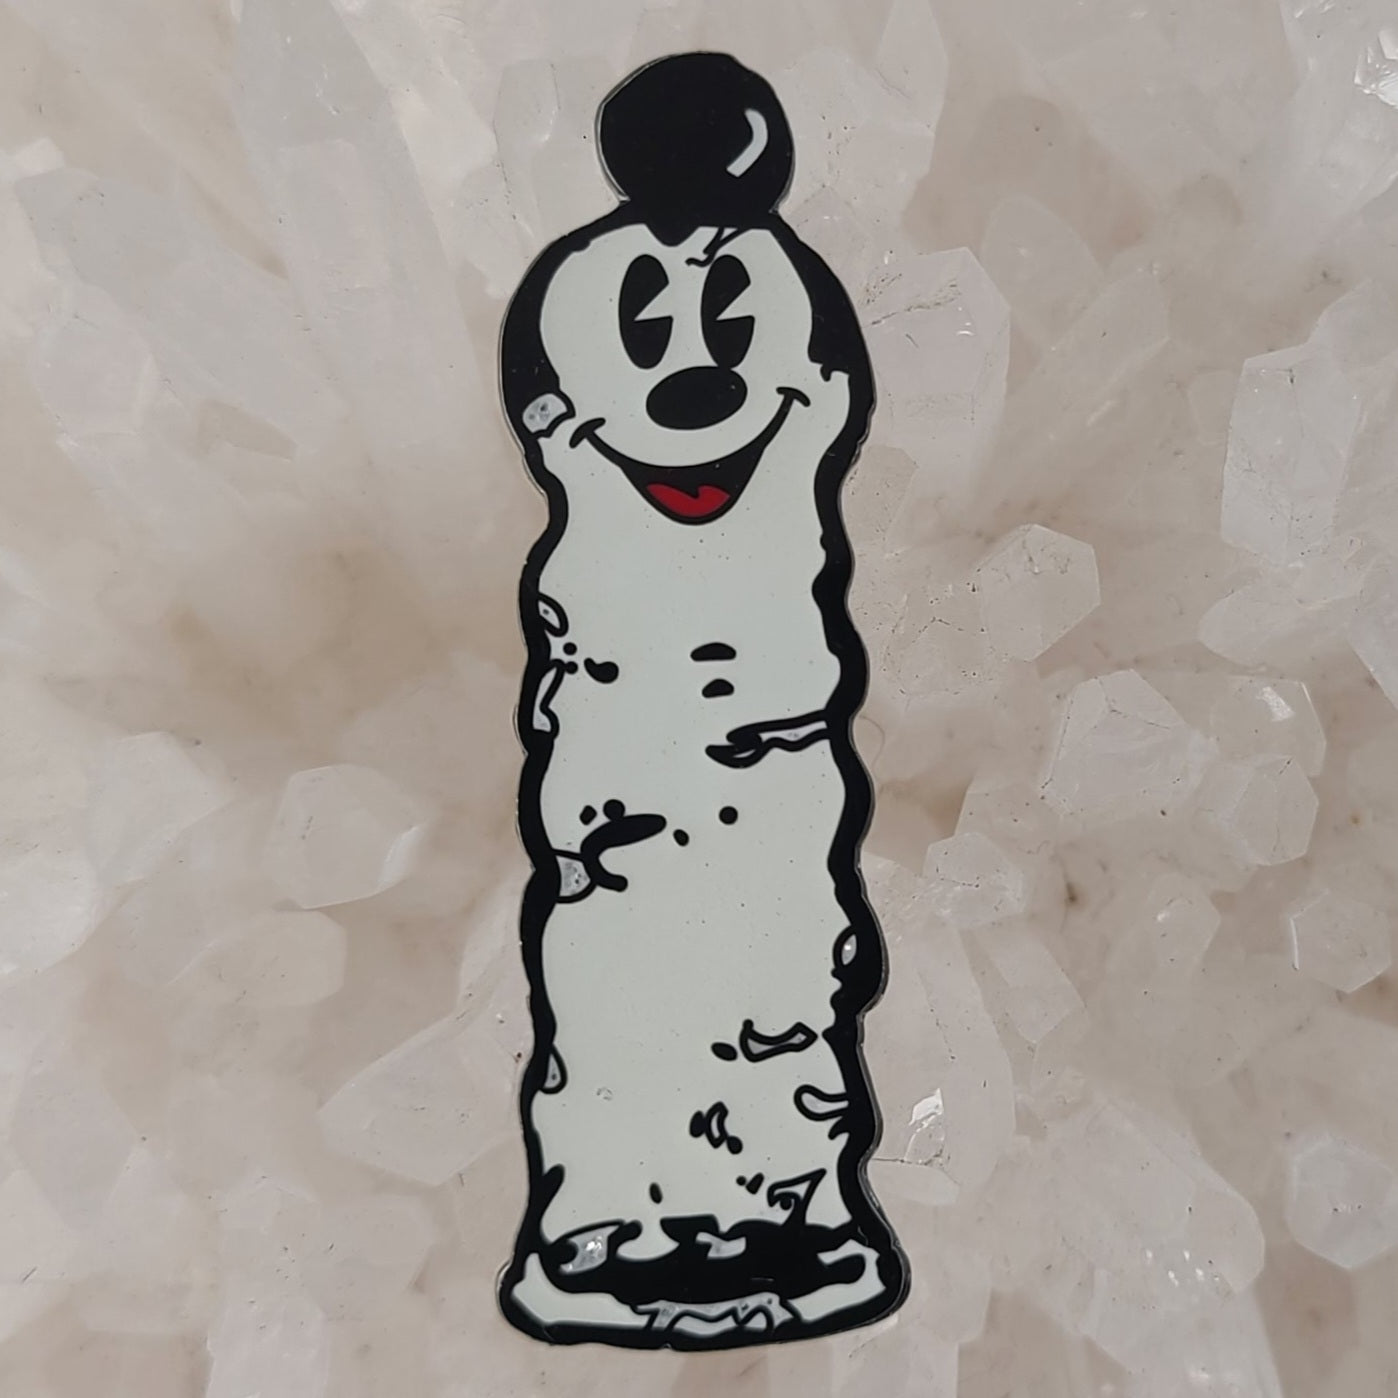 Mickey Used Up Condom Mouse Cartoon Glow Enamel Pins Hat Pins Lapel Pin Brooch Badge Festival Pin